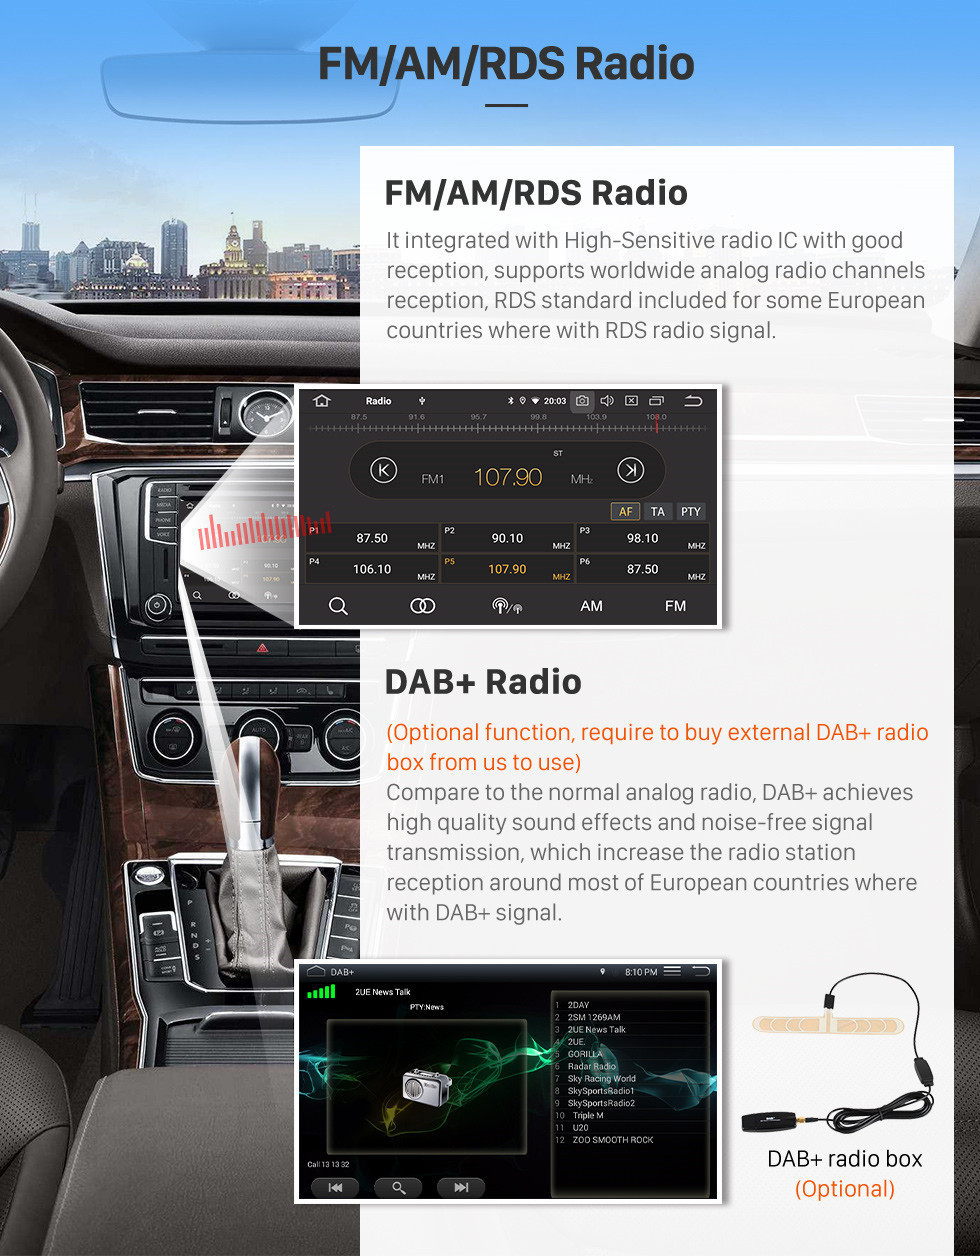 Seicane HD Touchscreen 2018-2019 Hyundai ix35 Android 11.0 9 inch GPS Navigation Radio Bluetooth Carplay AUX Music support SWC OBD2 Mirror Link Backup camera